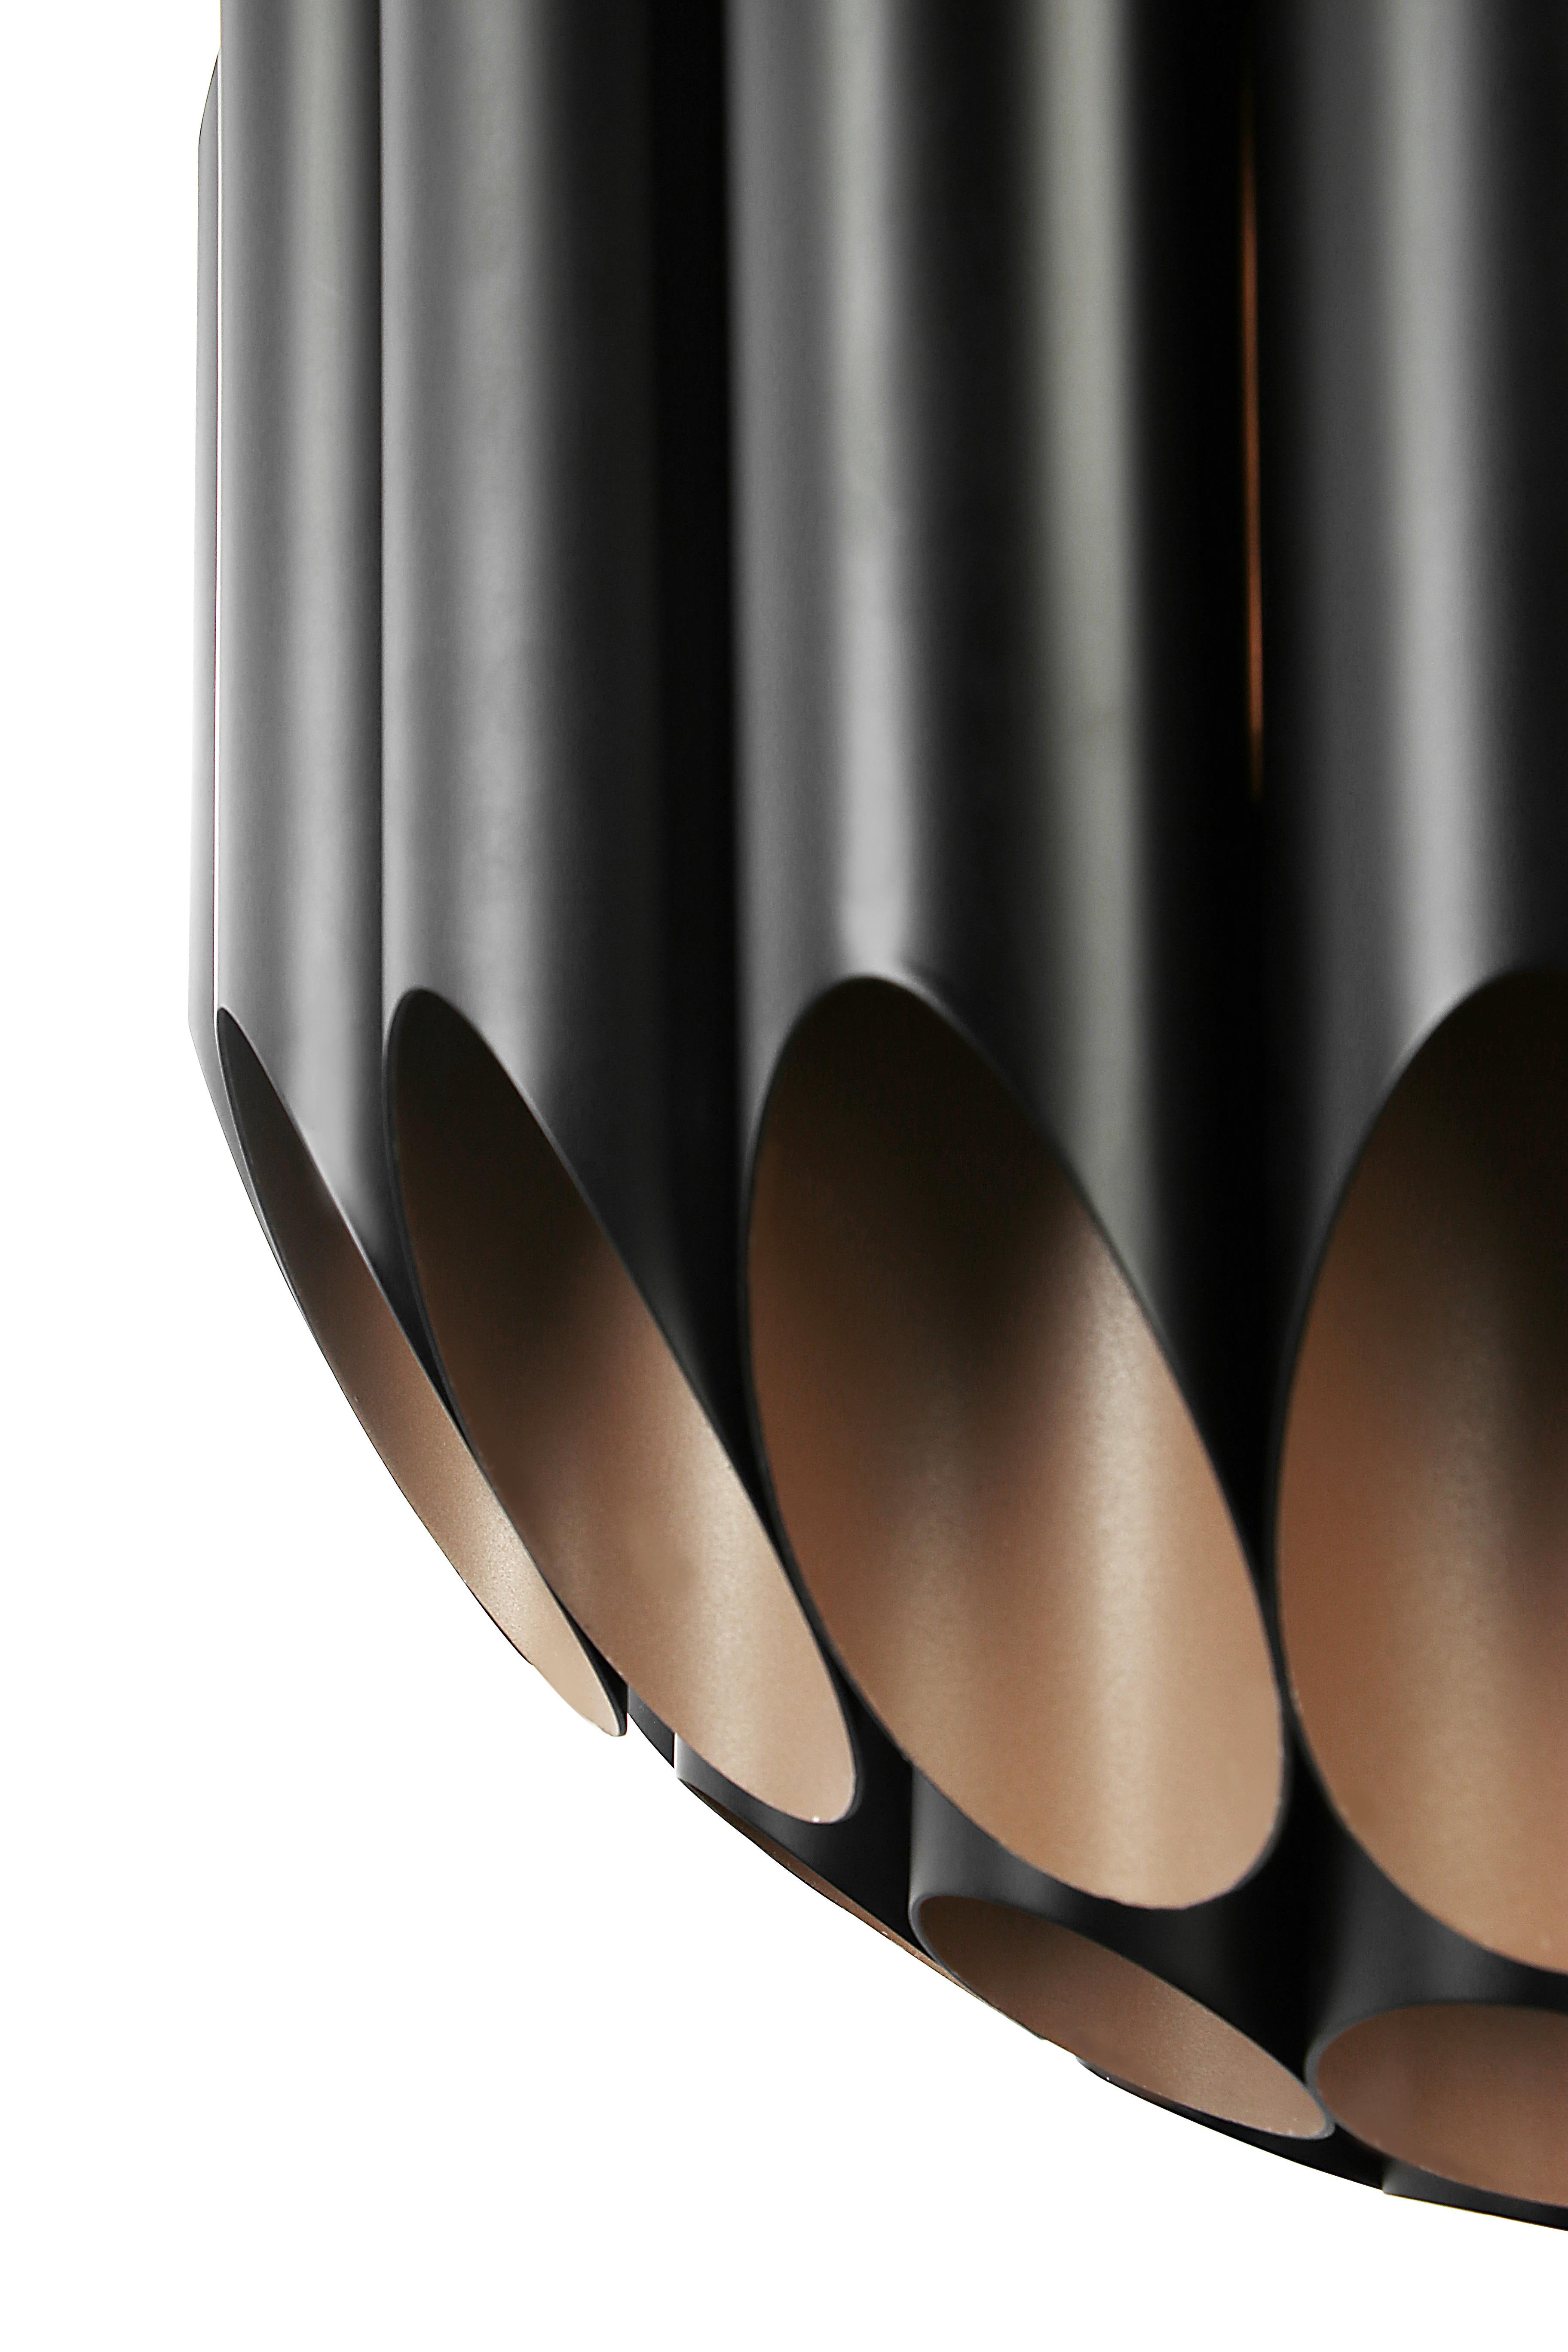 Mid-Century Modern Kravitz Pendant Light in Black and Aluminium For Sale